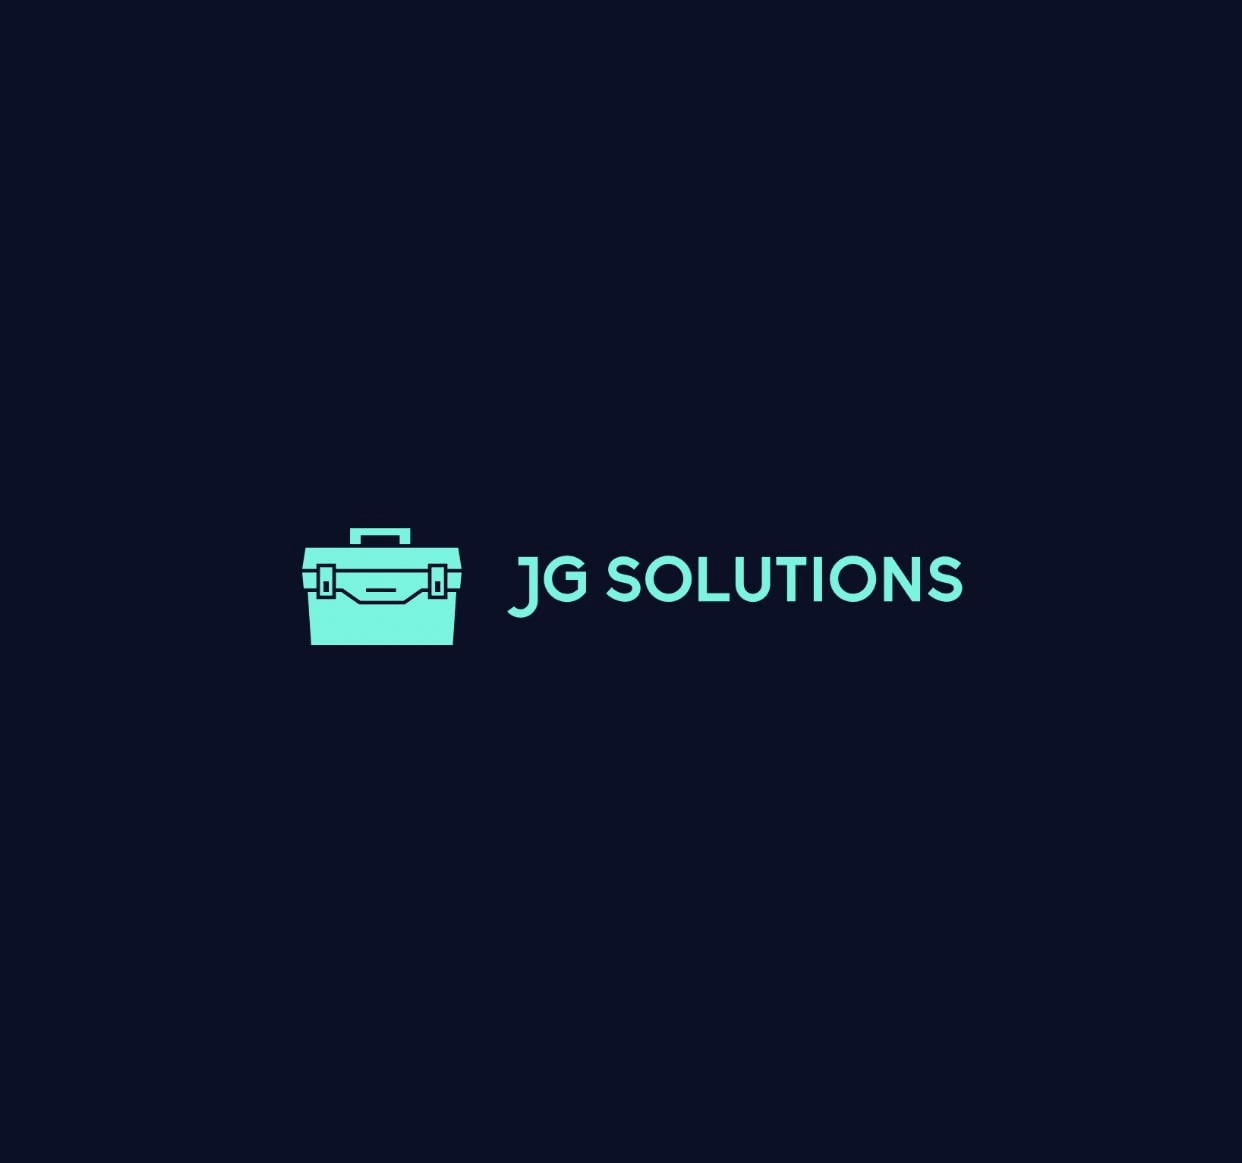 JG solutions